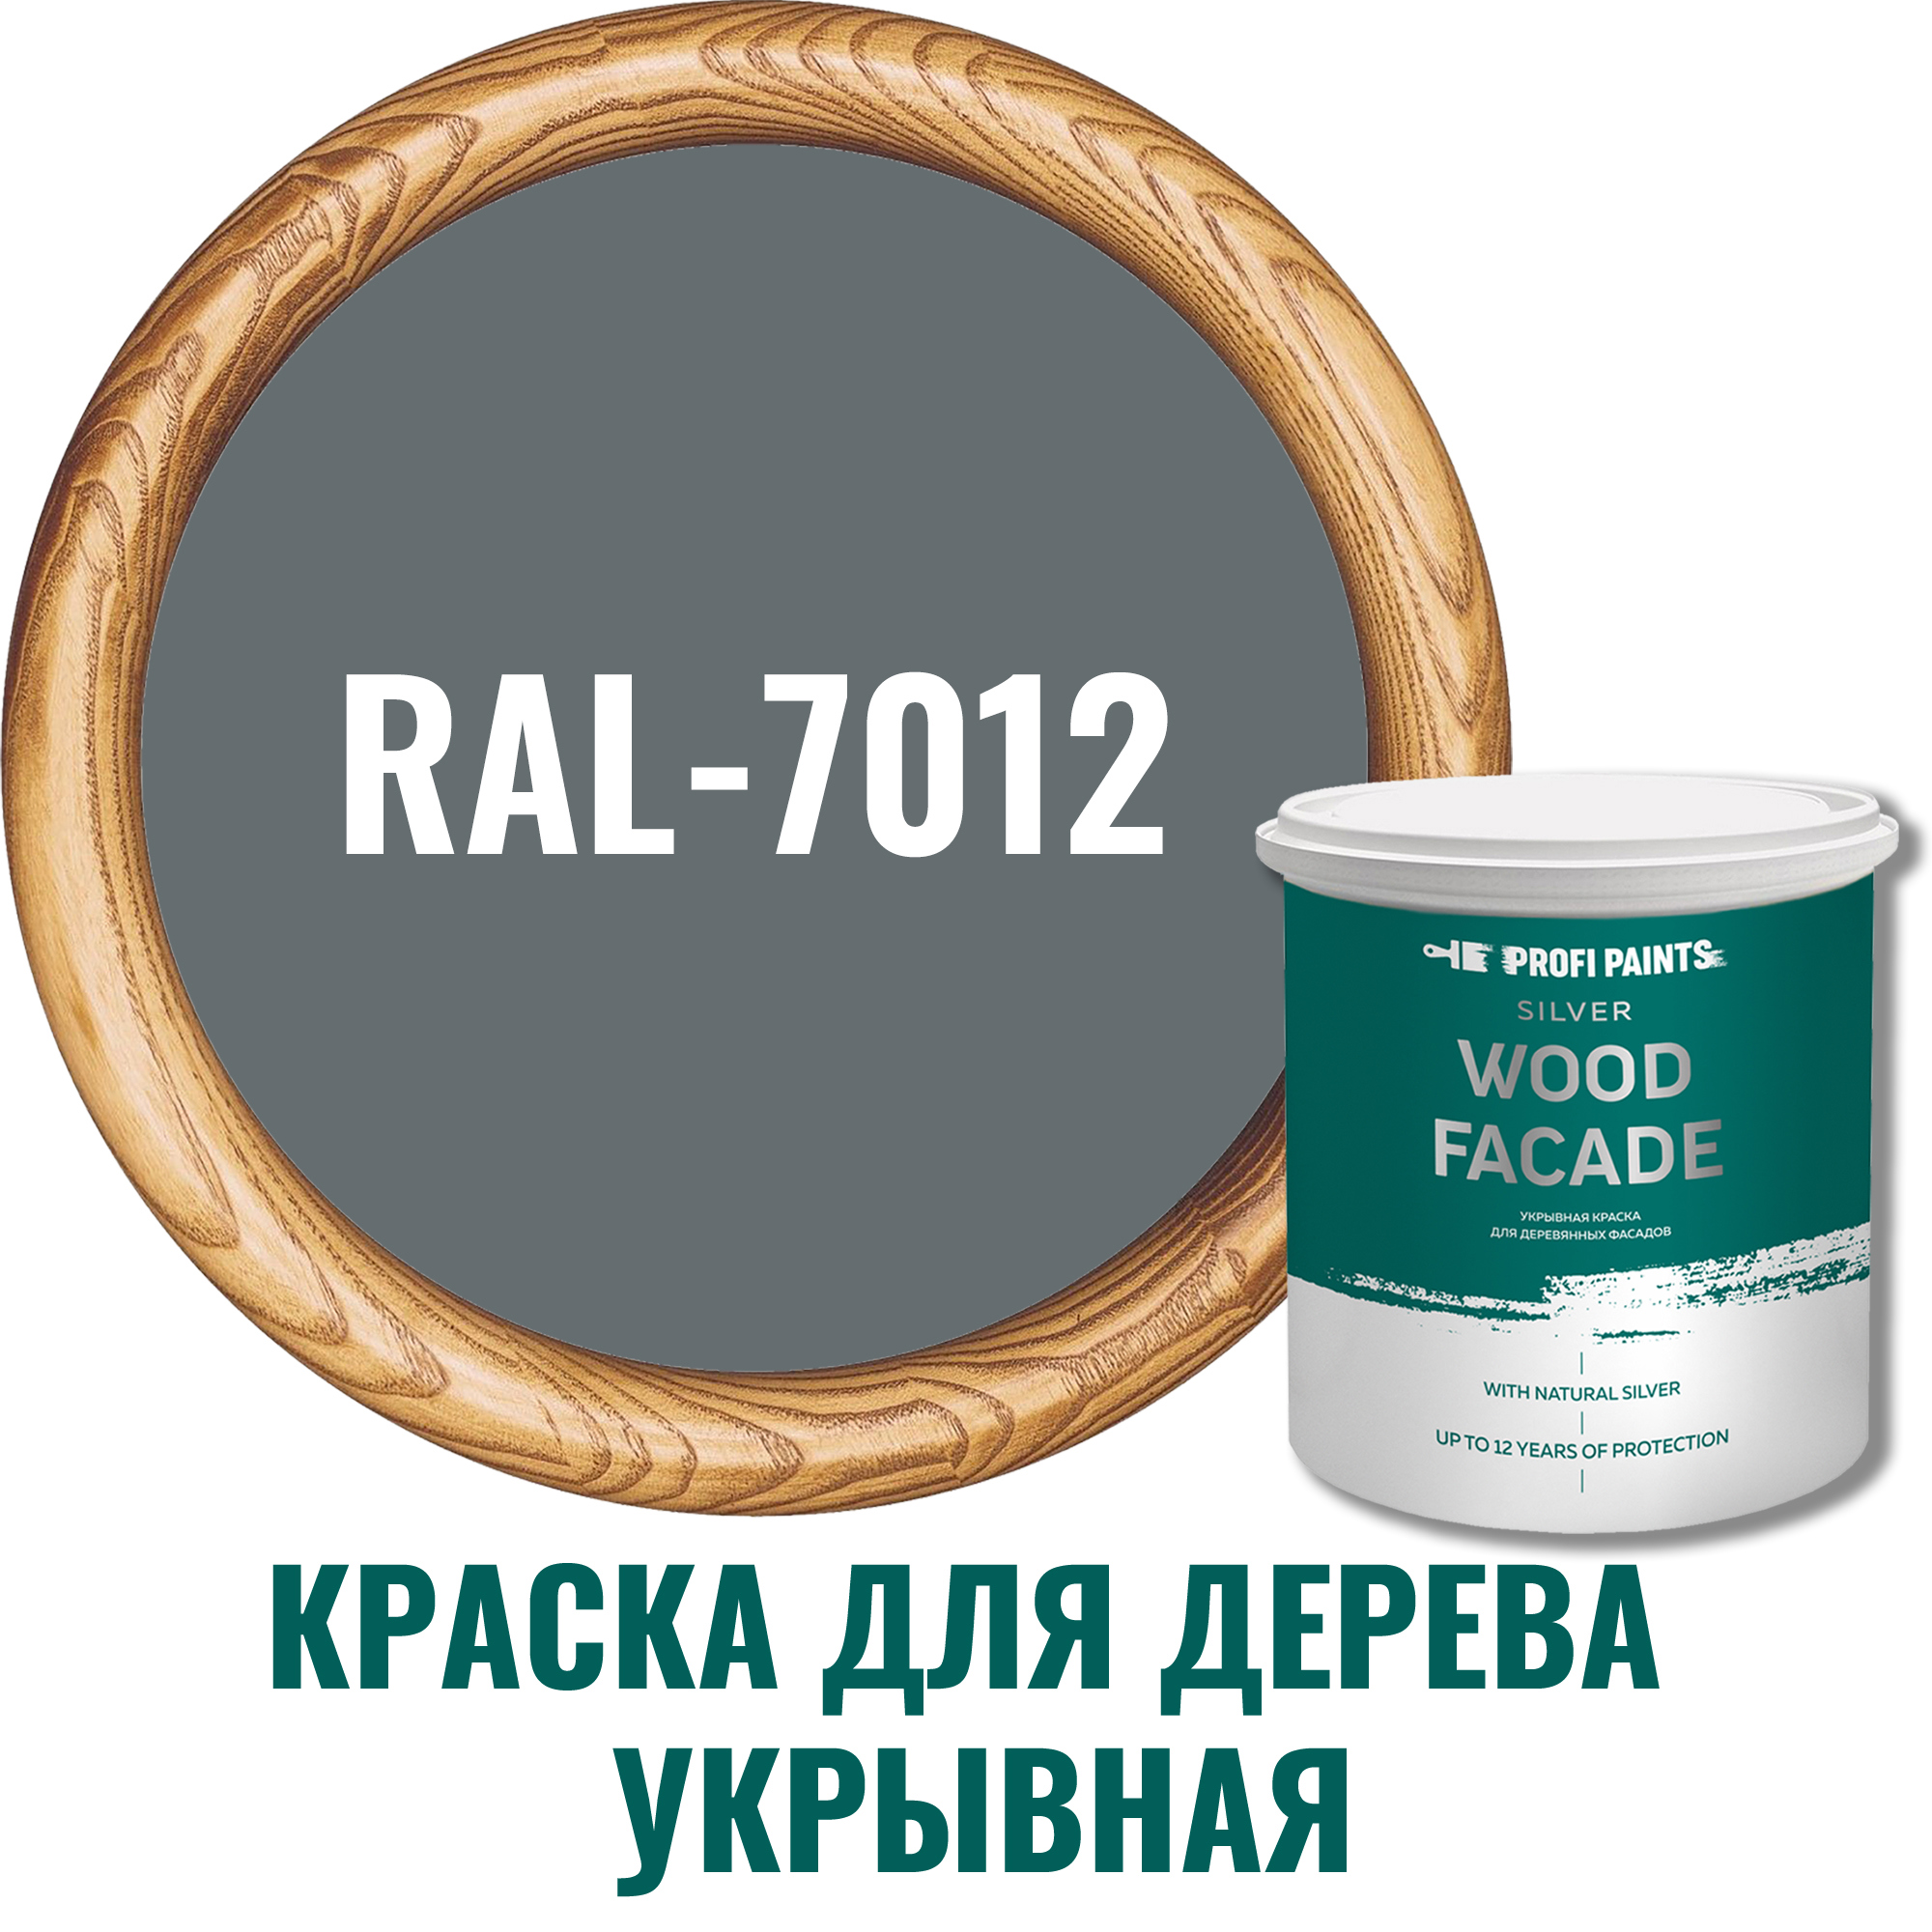 91106579 Краска для дерева 11219_D SILVER WOOD FASADE цвет RAL-7012 базальт 0.9 л STLM-0487577 PROFIPAINTS